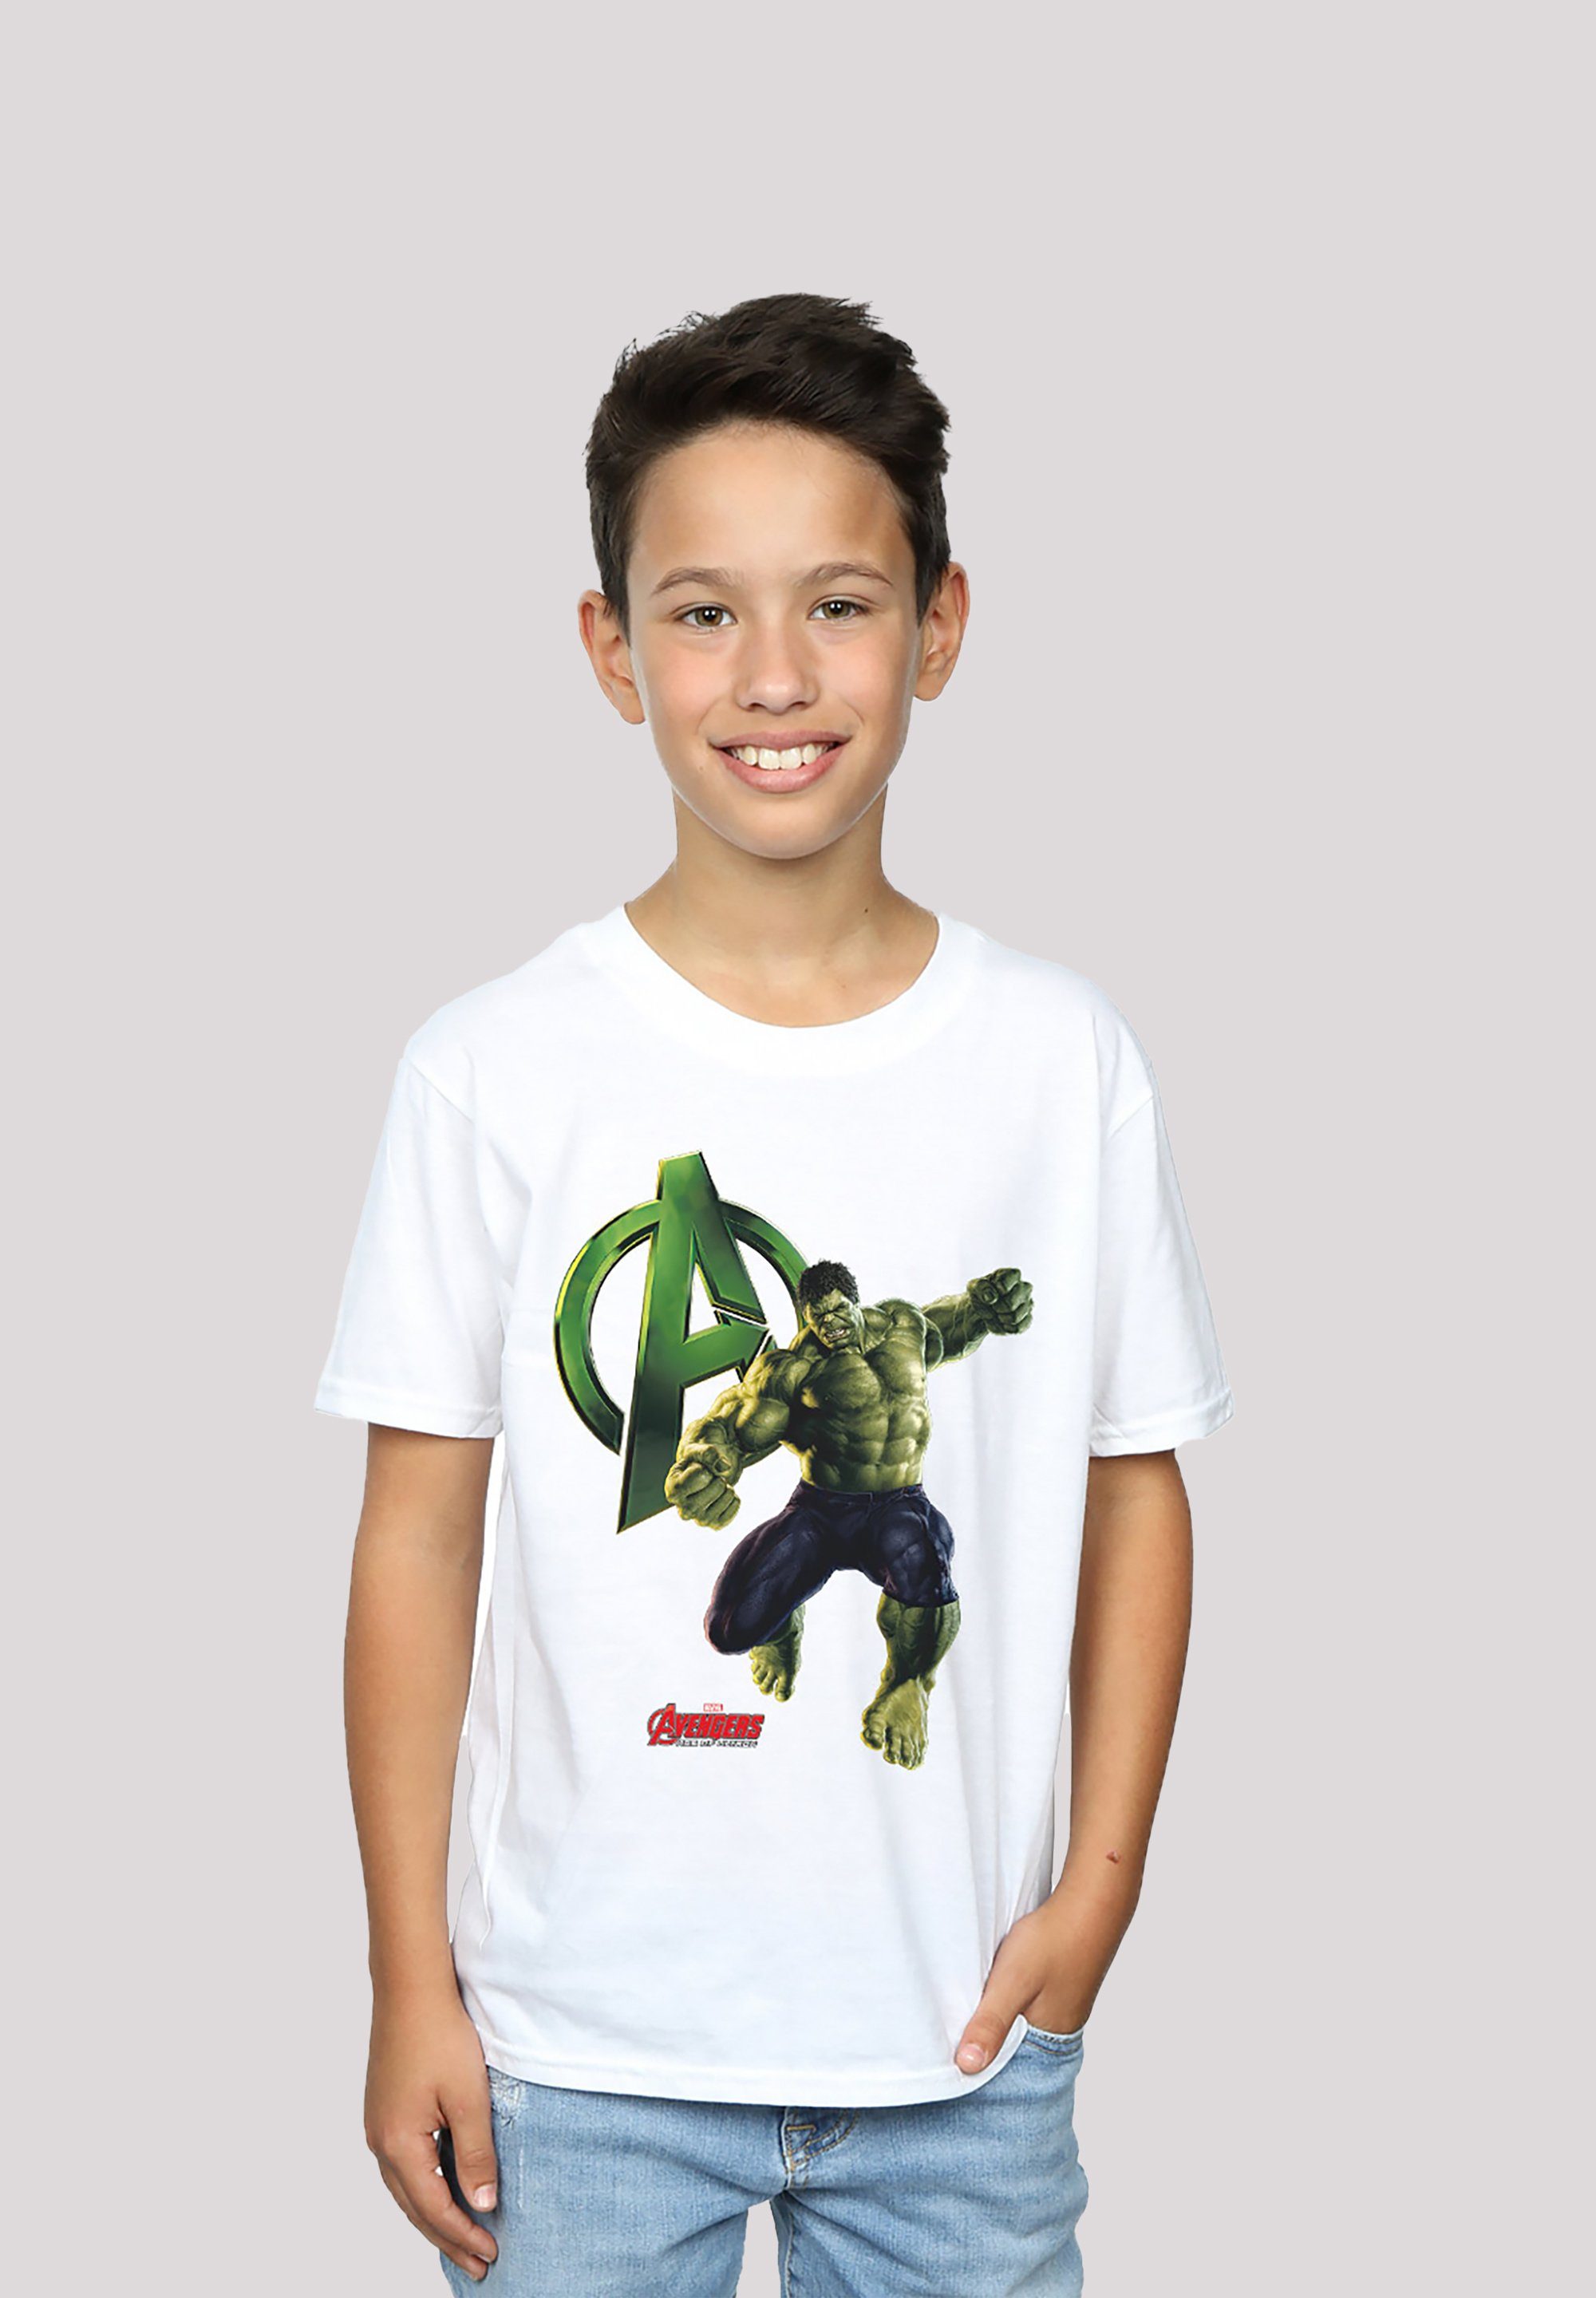 Hulk Ultron Marvel Age Avengers T-Shirt of Incredible F4NT4STIC Print